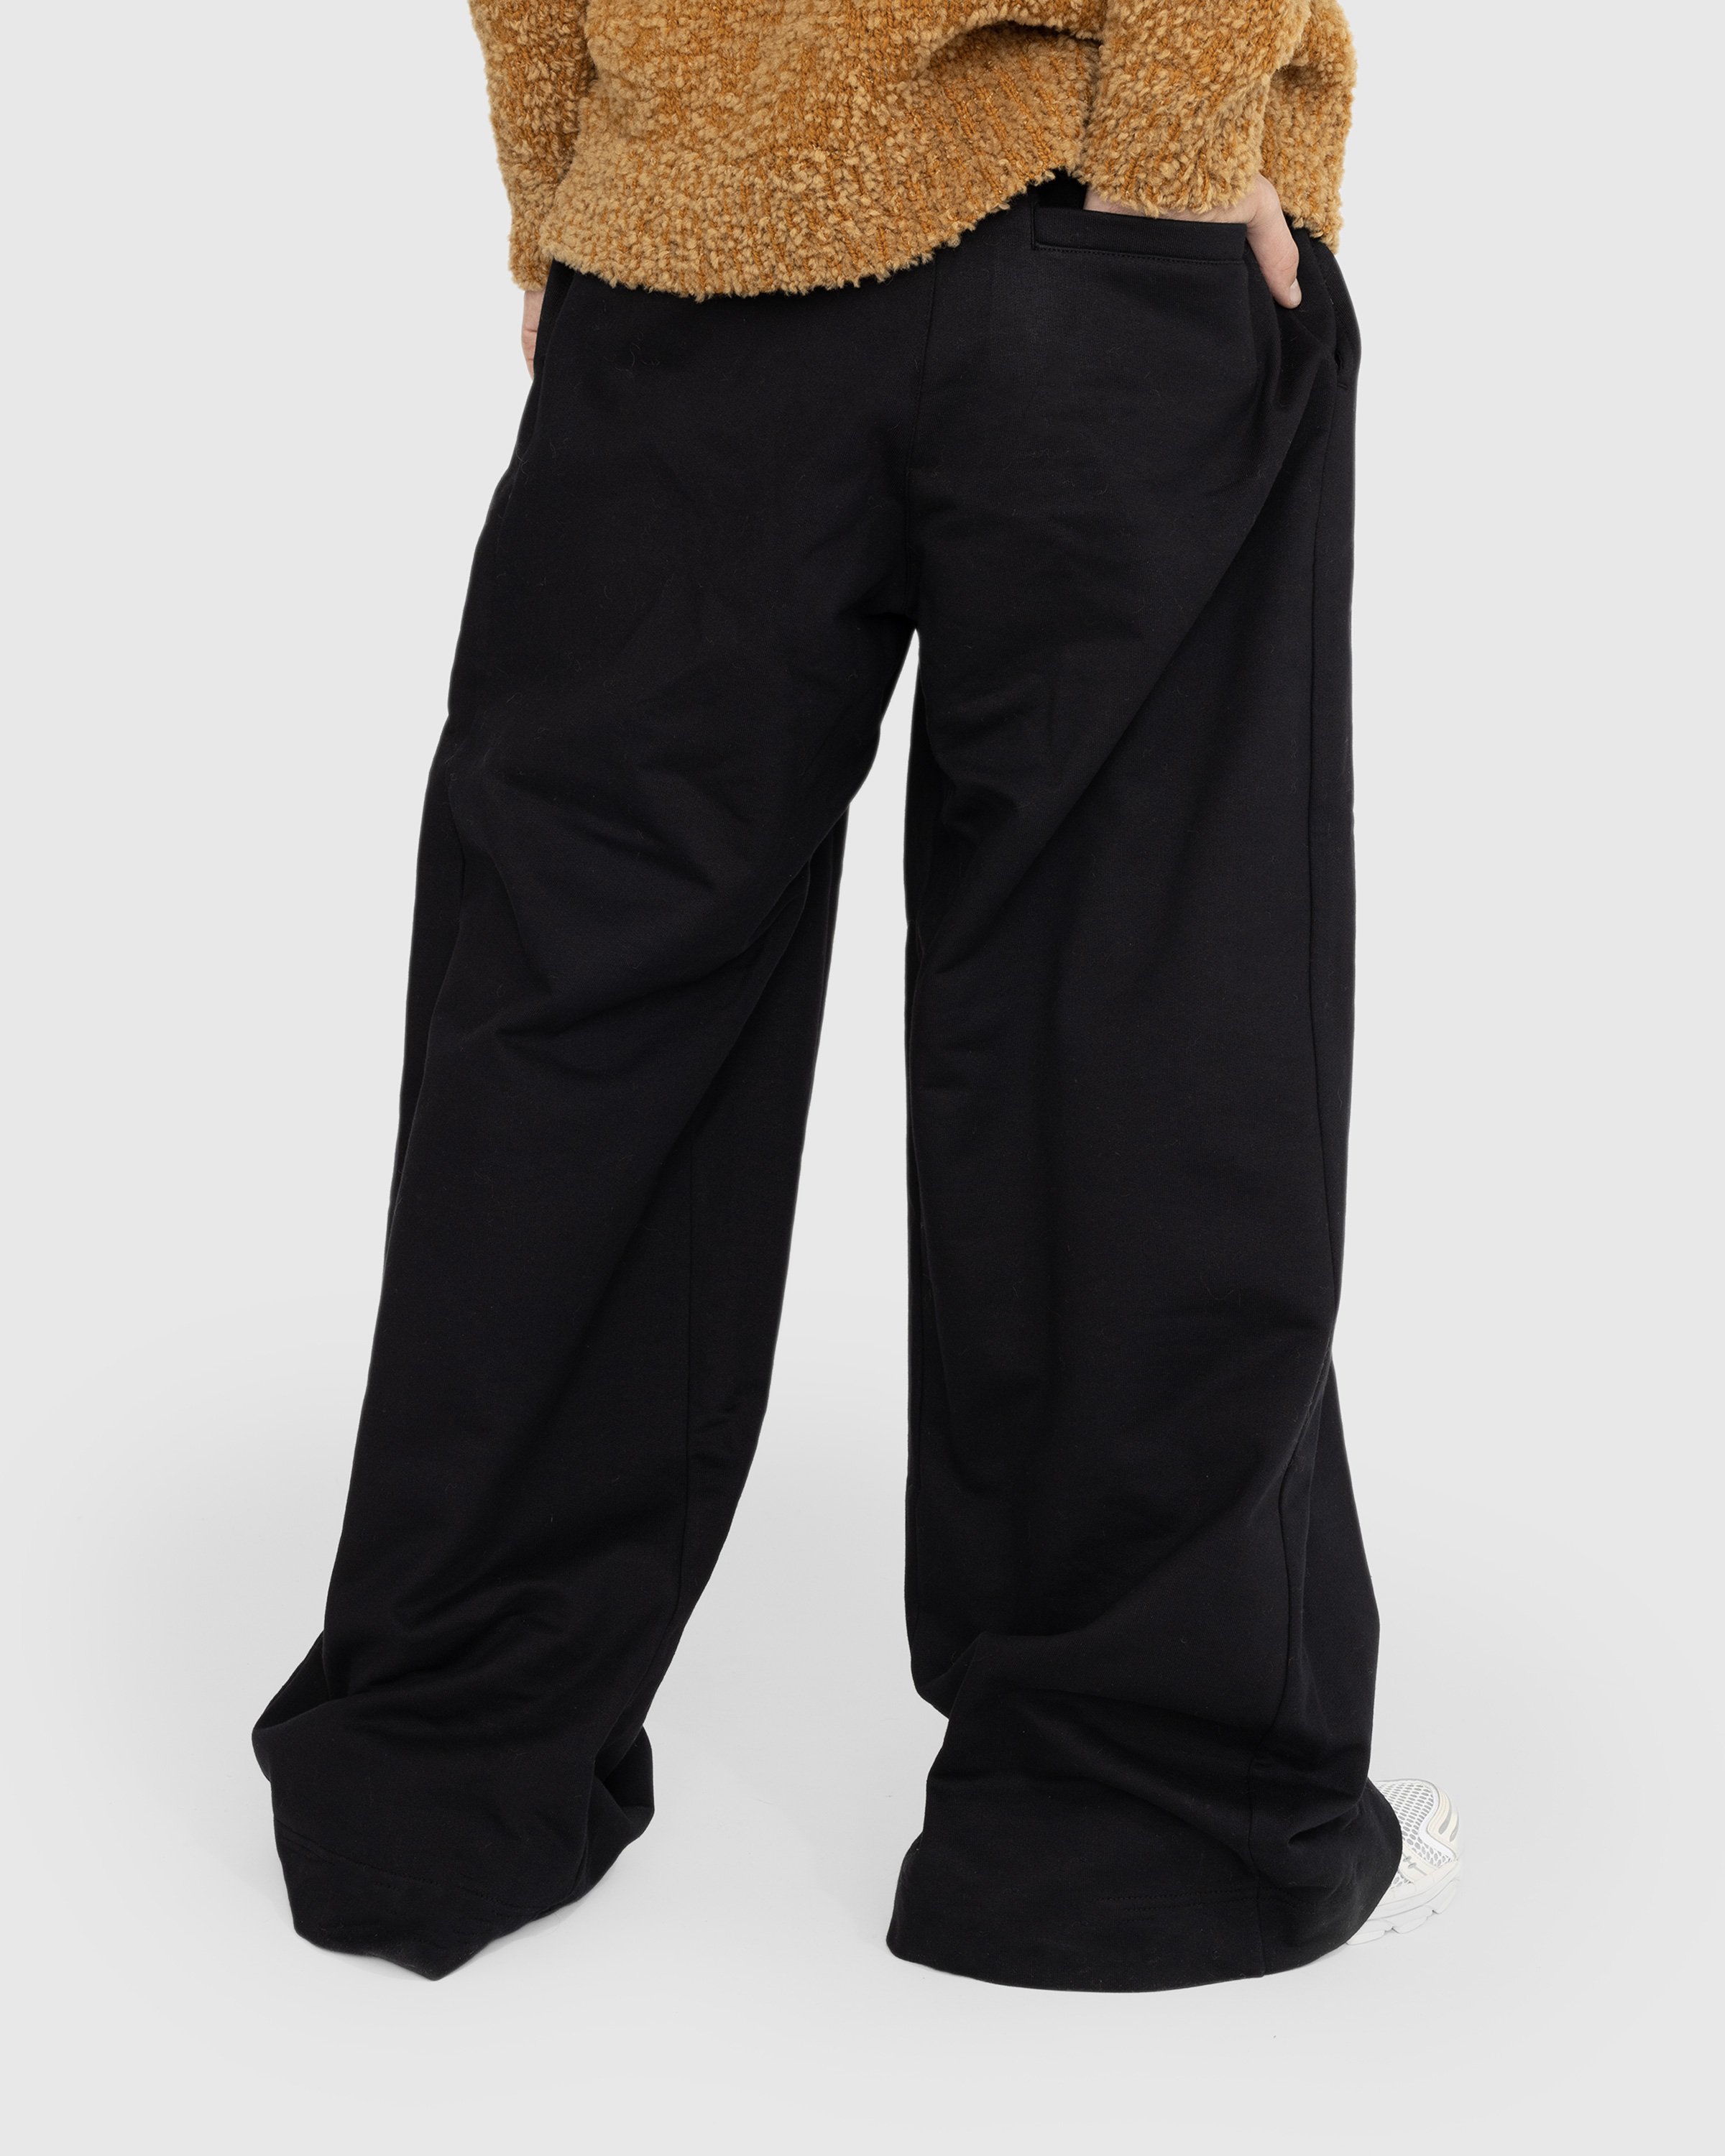 Dries van Noten - Hama Cotton Jersey Pants Black - Clothing - Black - Image 3